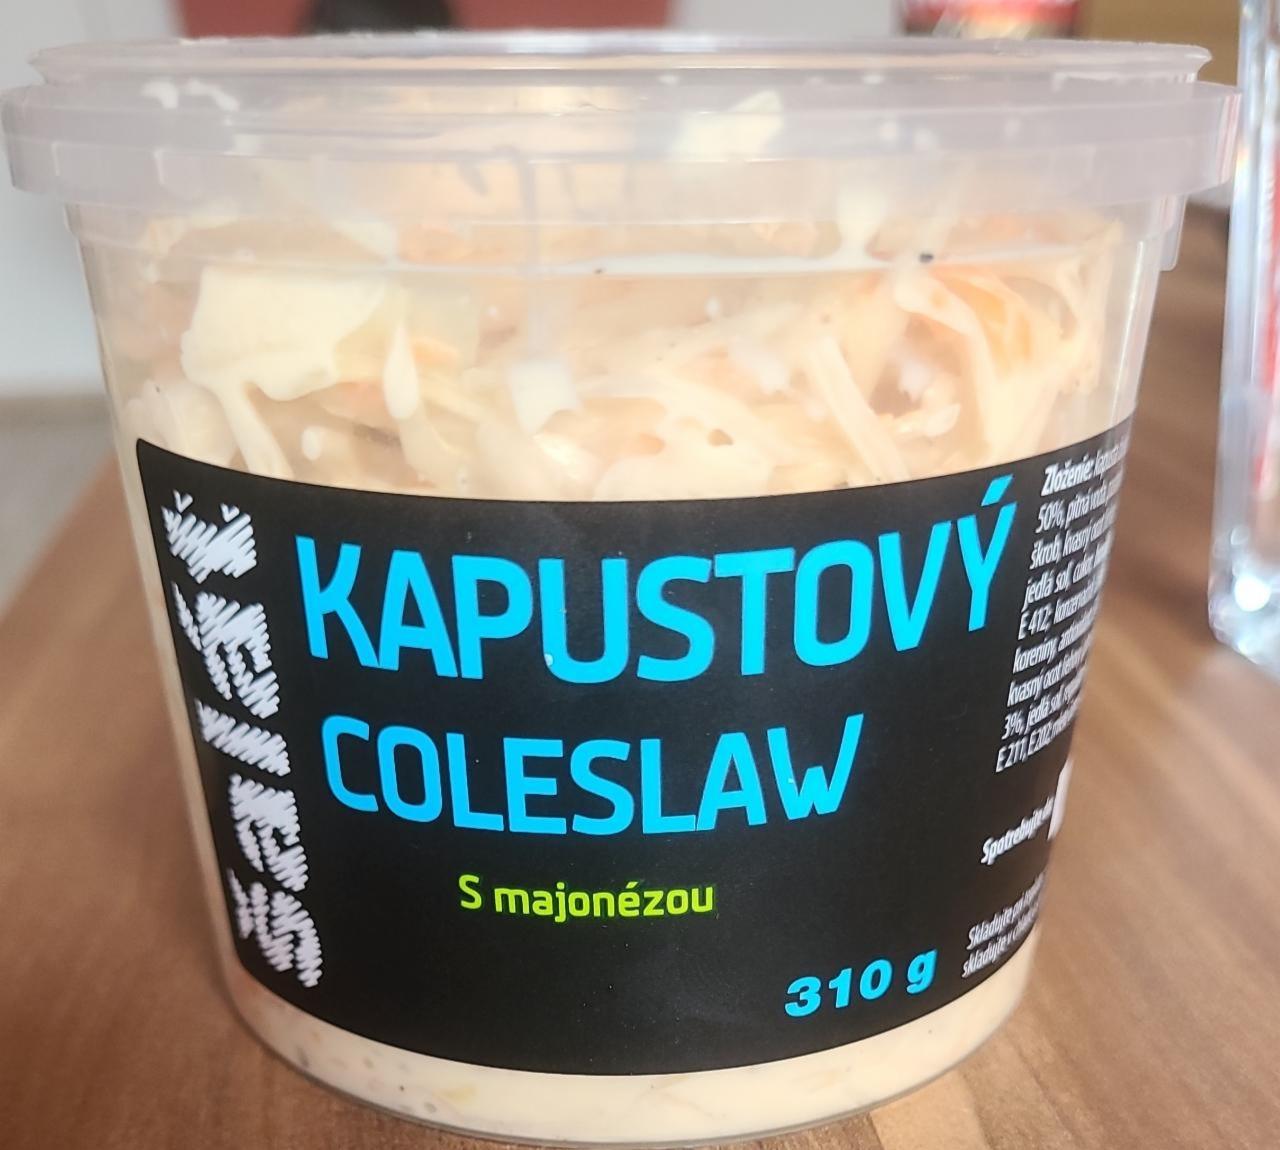 Fotografie - Šalát kapustový Coleslaw s majonézou Slovatys